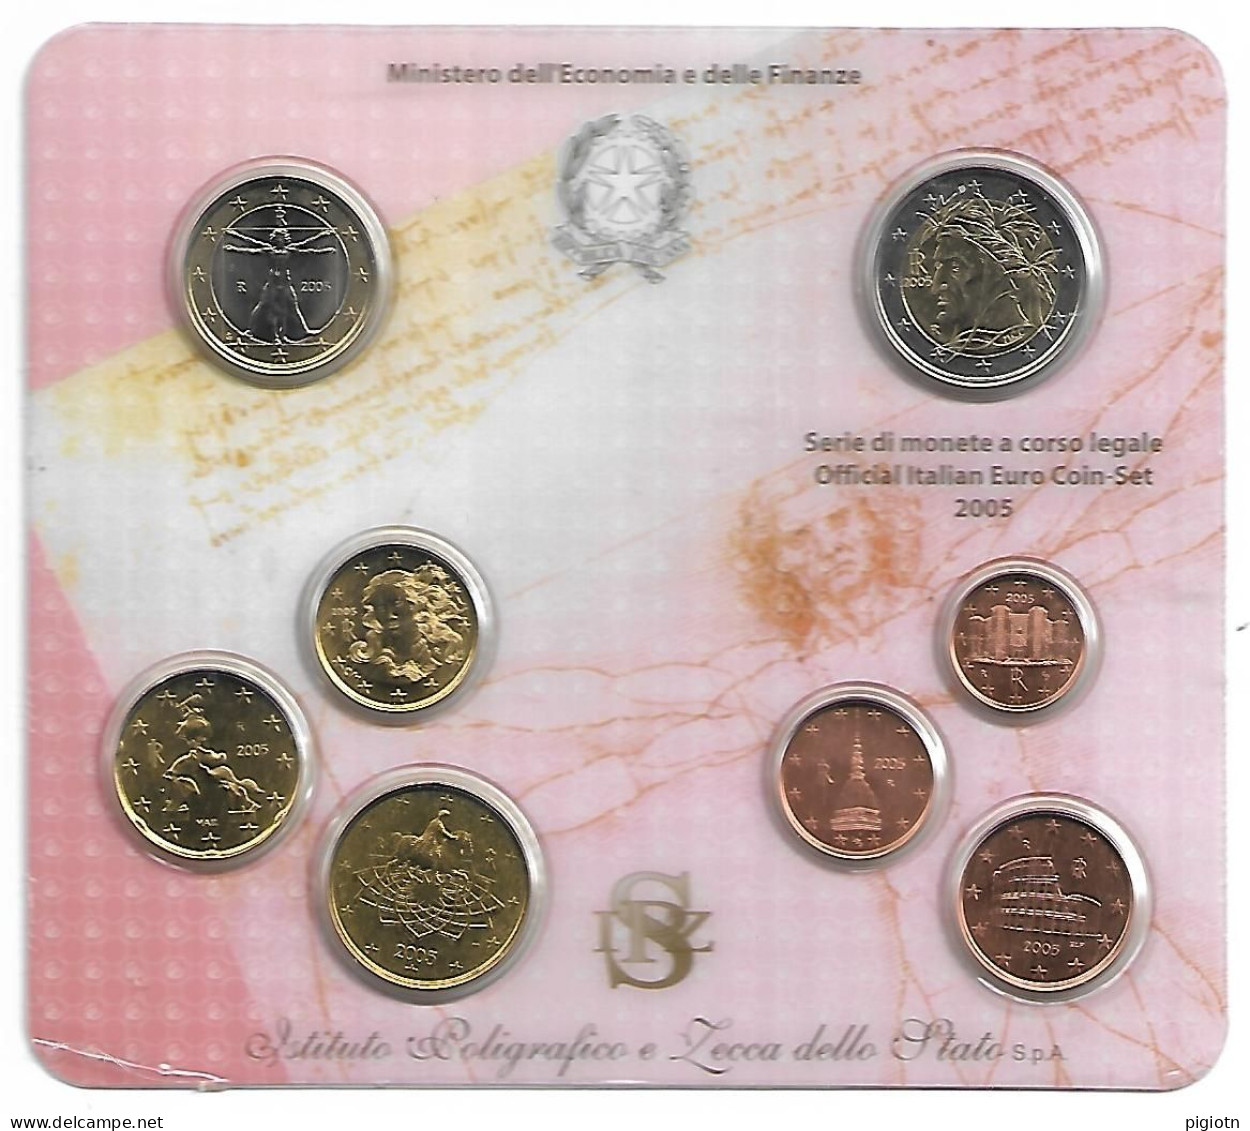 EURO 2005 - SERIE DI MONETE A CORSO LEGALE 2005 OFFICIAL ITALIAN COIN-SET - Jahressets & Polierte Platten